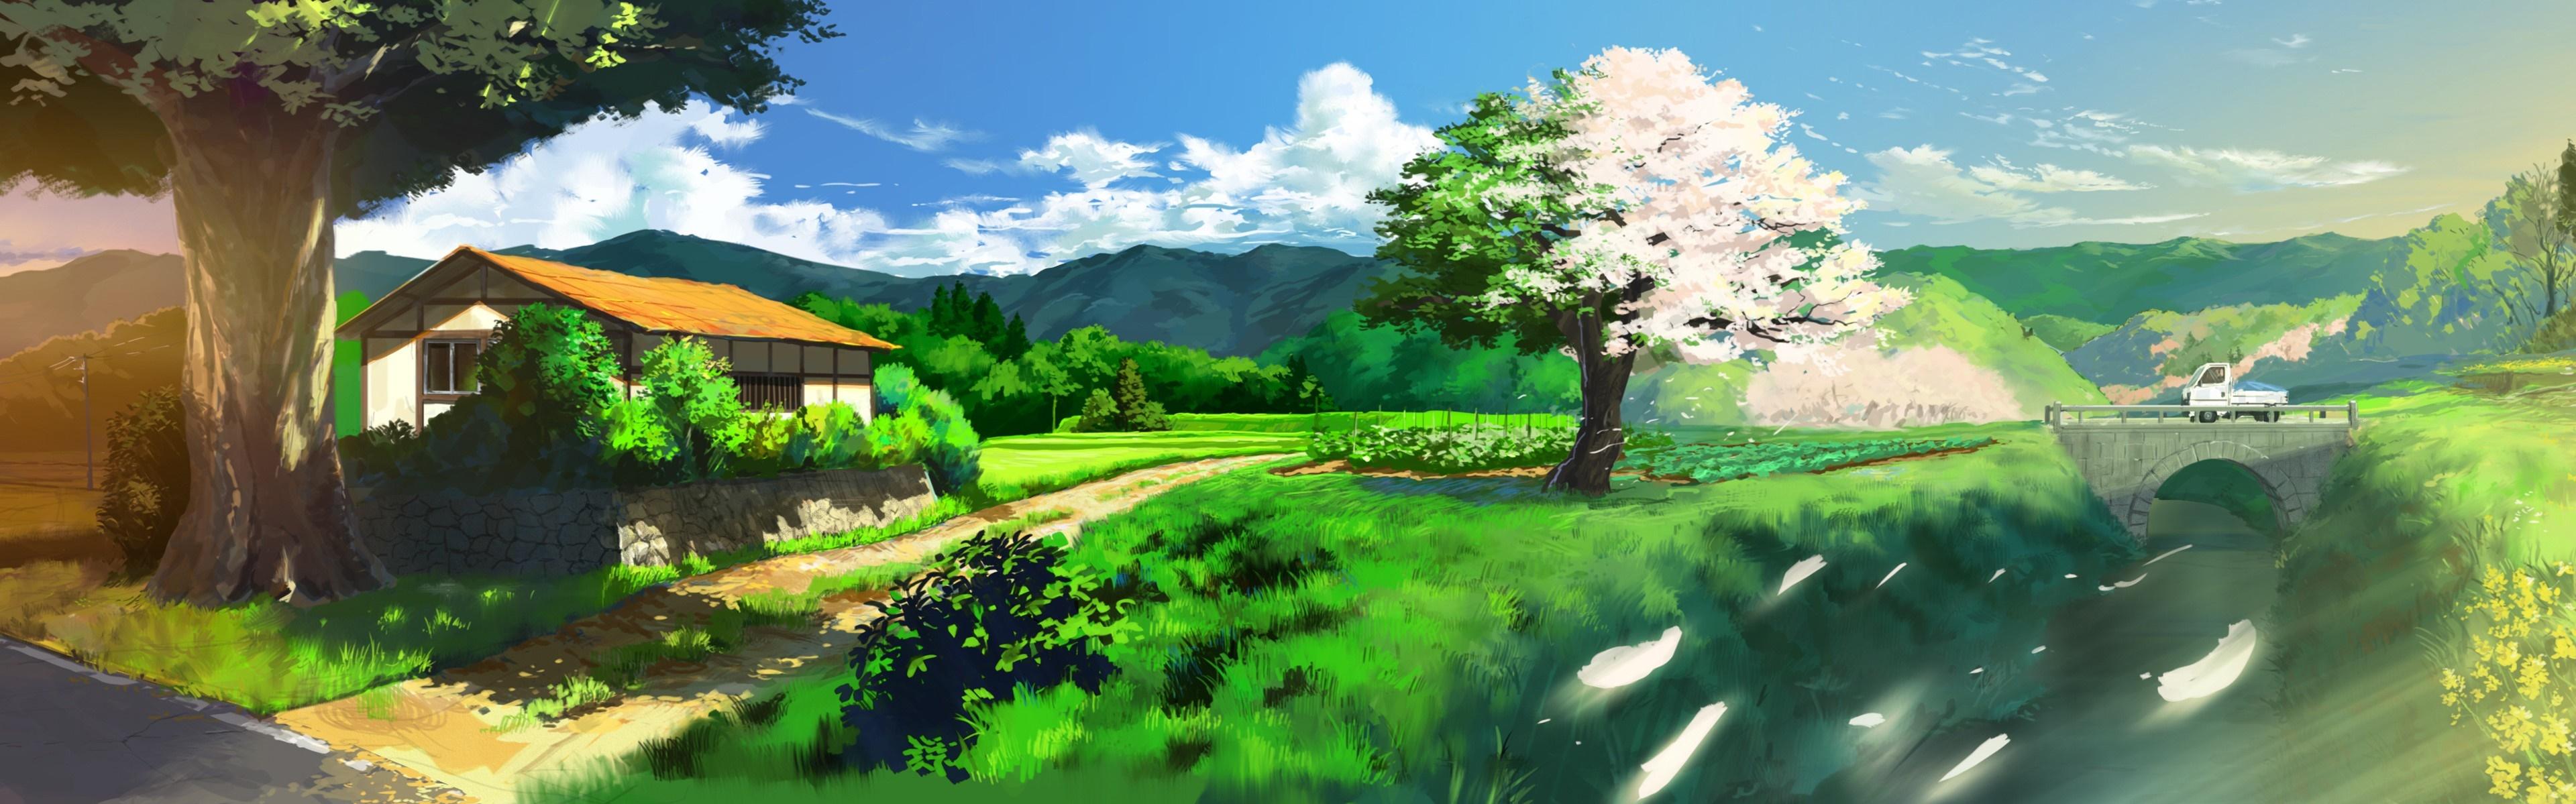 1043015 landscape anime nature valley jungle peaceful peace